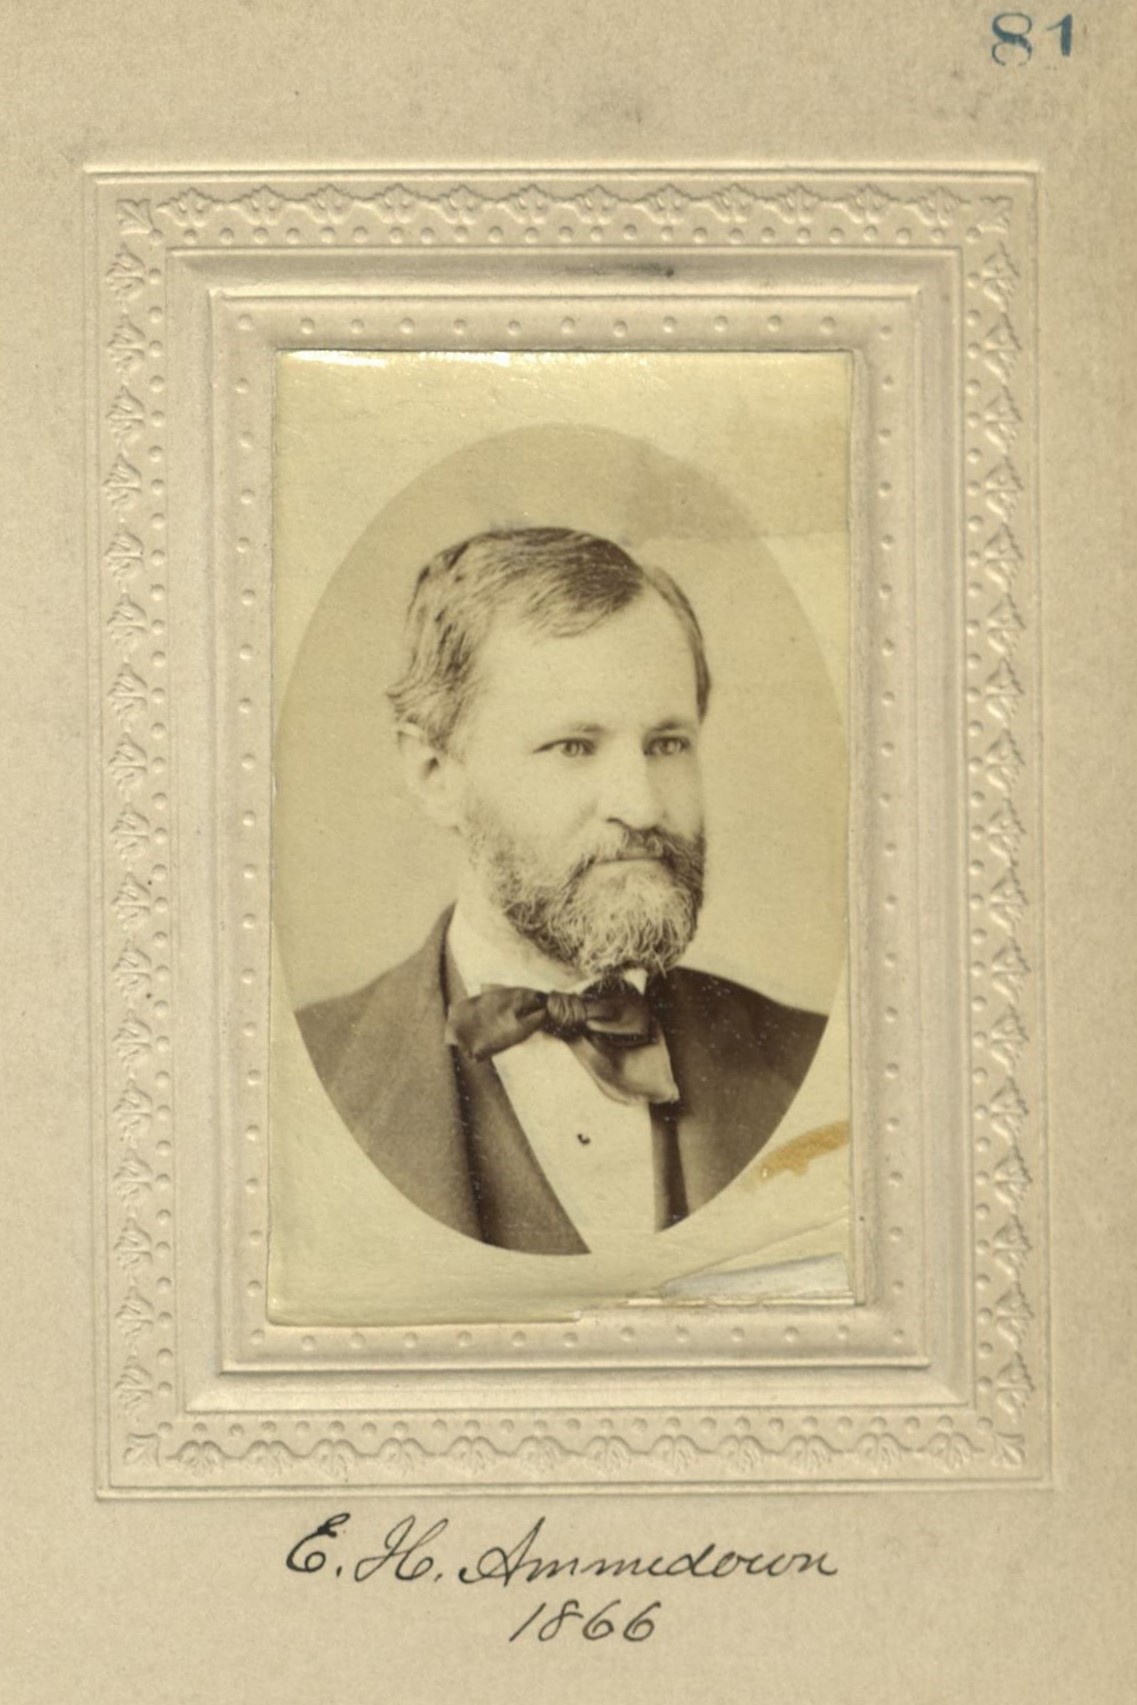 Member portrait of Edward H. Ammidown